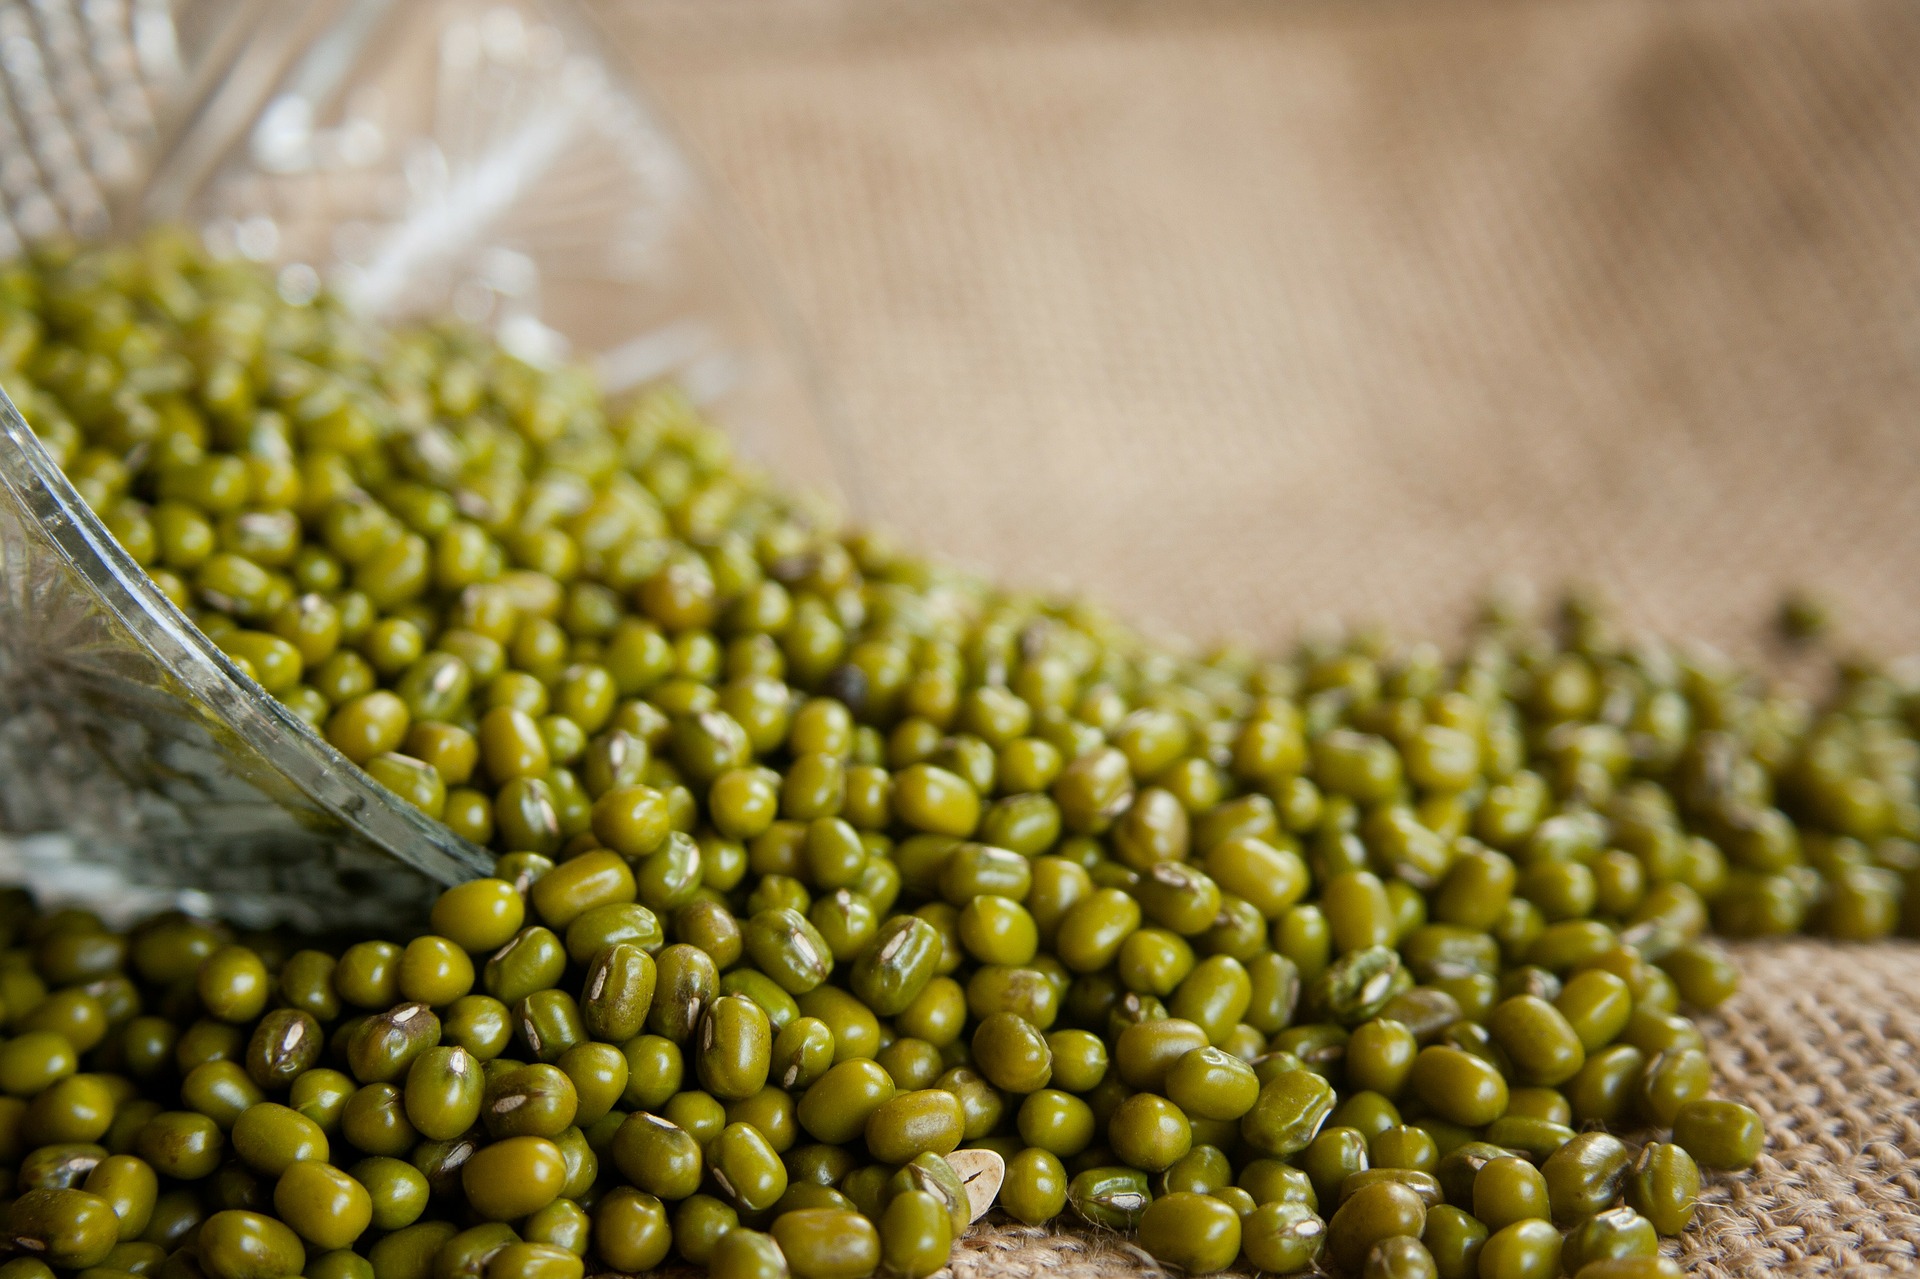 Manfaat kacang hijau bagi kesehatan